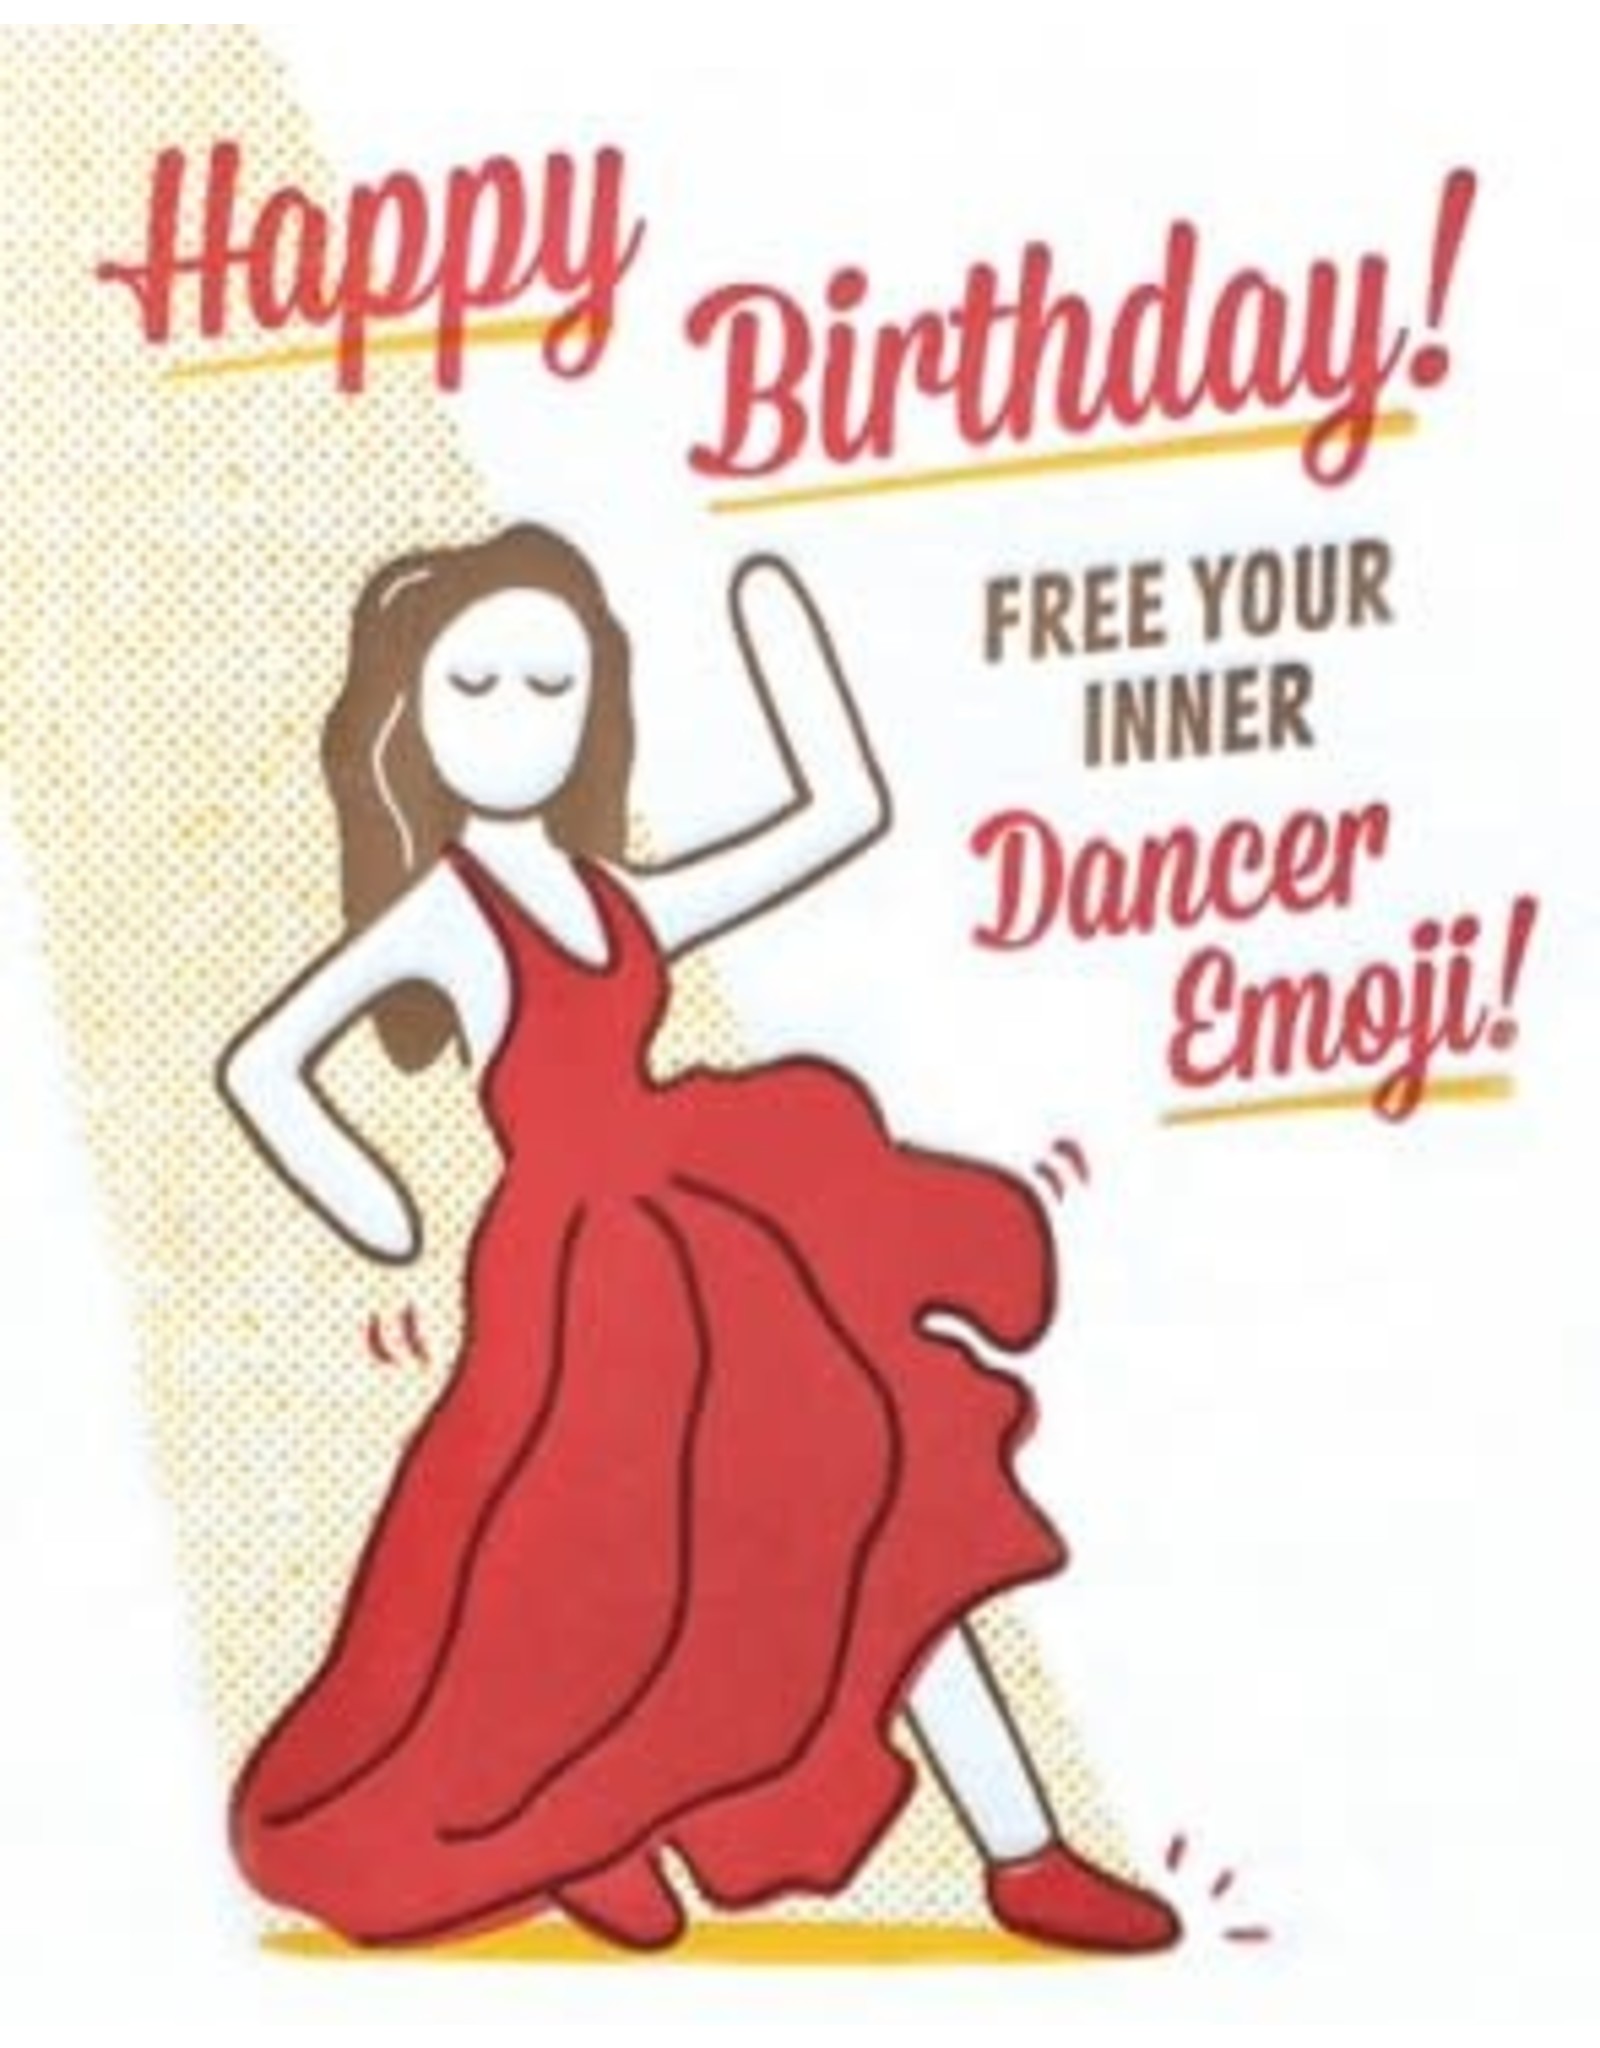 Dancer Emoji Birthday Greeting Card